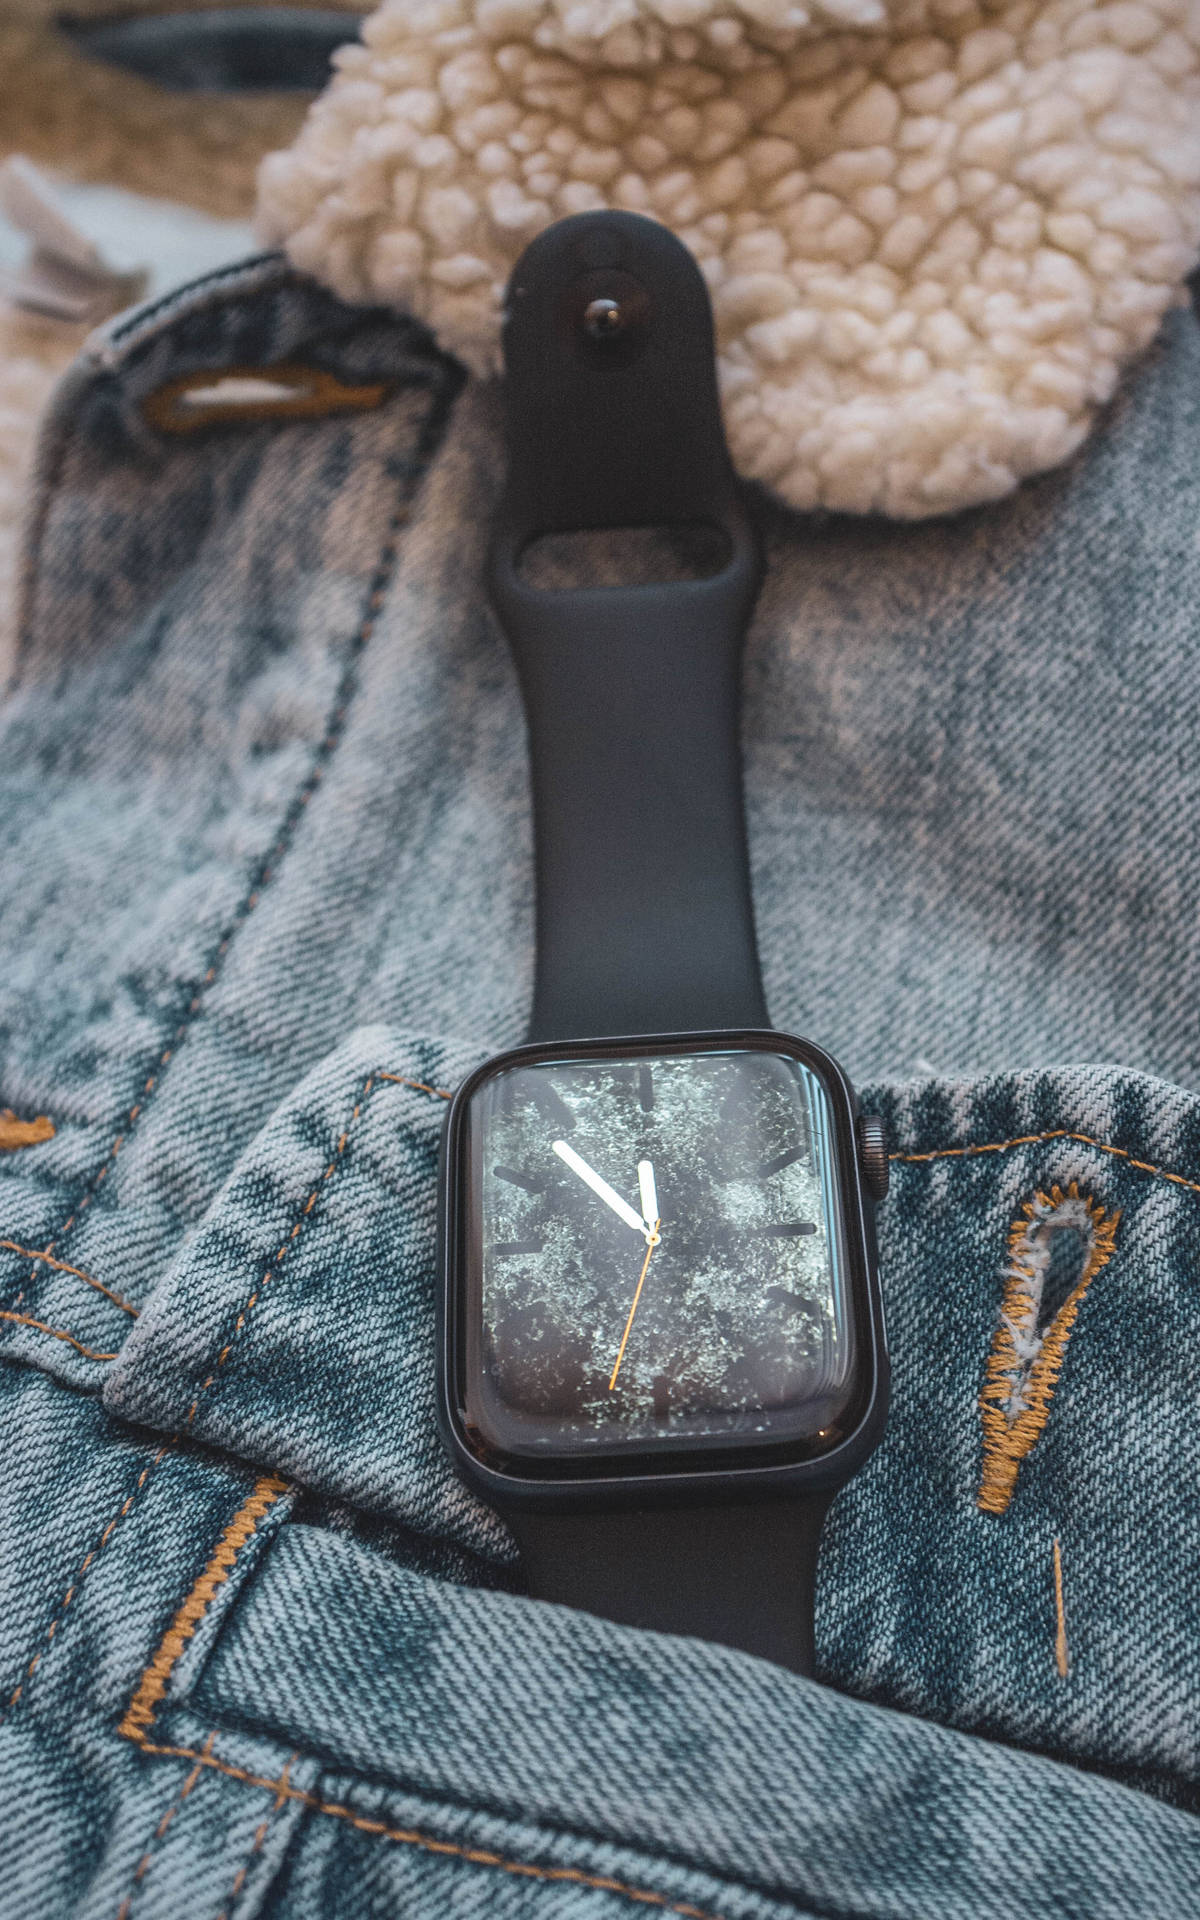 Apple Smartwatch On Denim Jacket